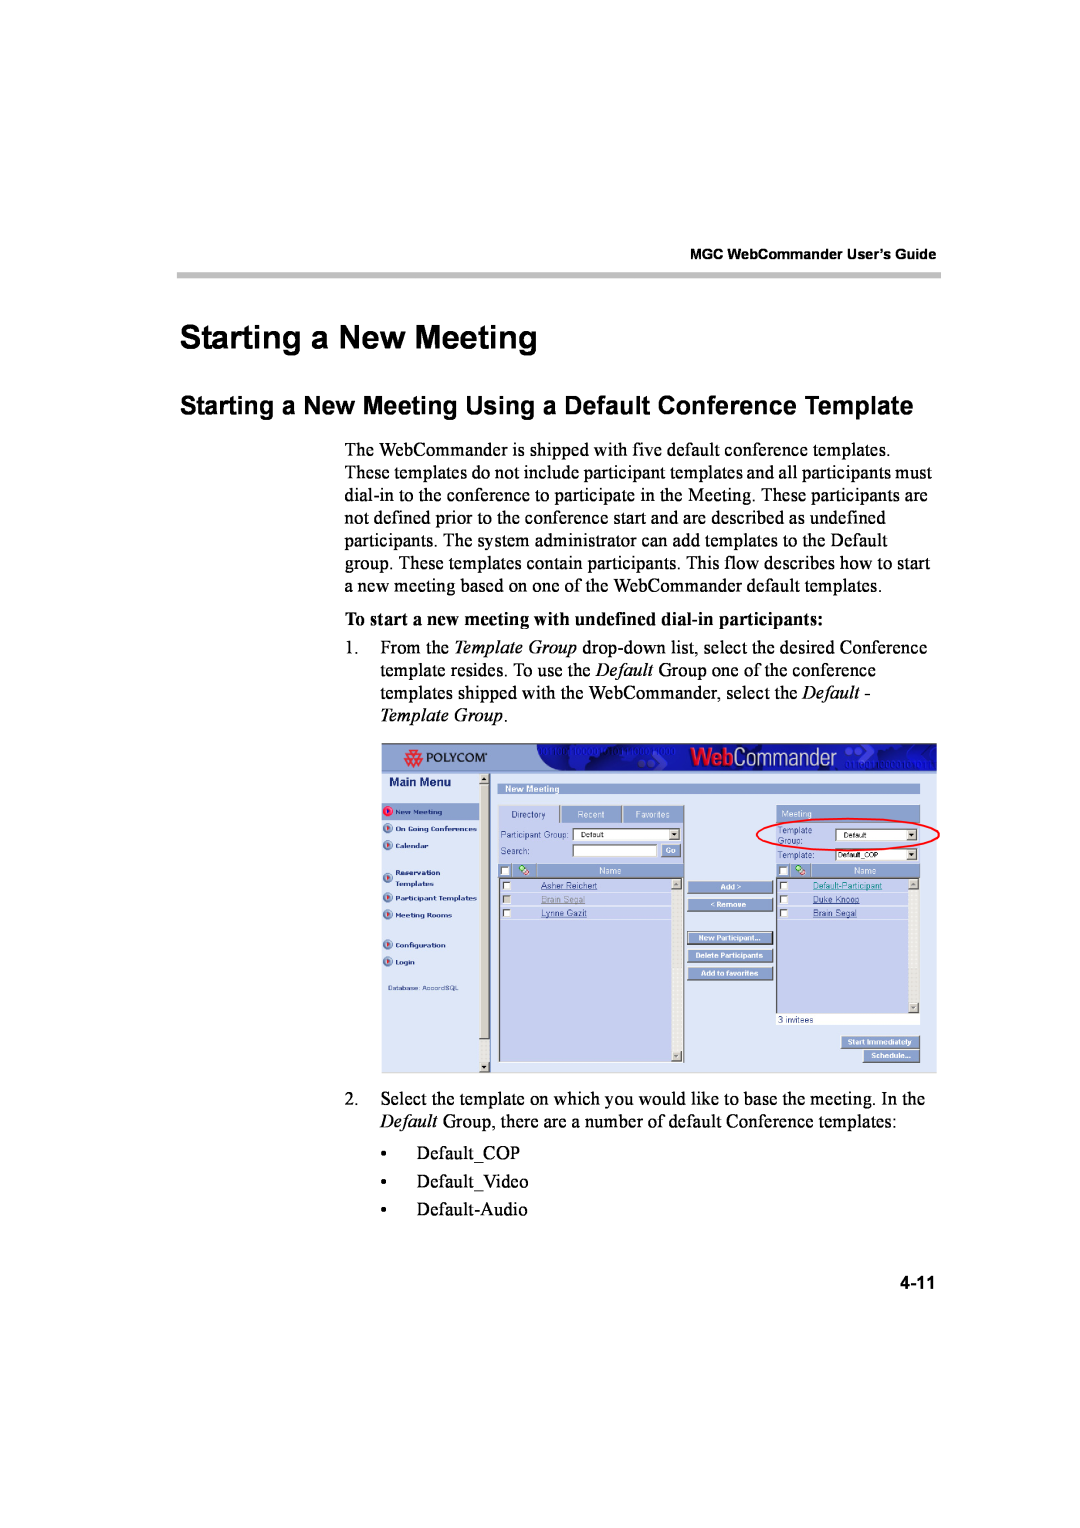 Polycom 8 manual Starting a New Meeting 